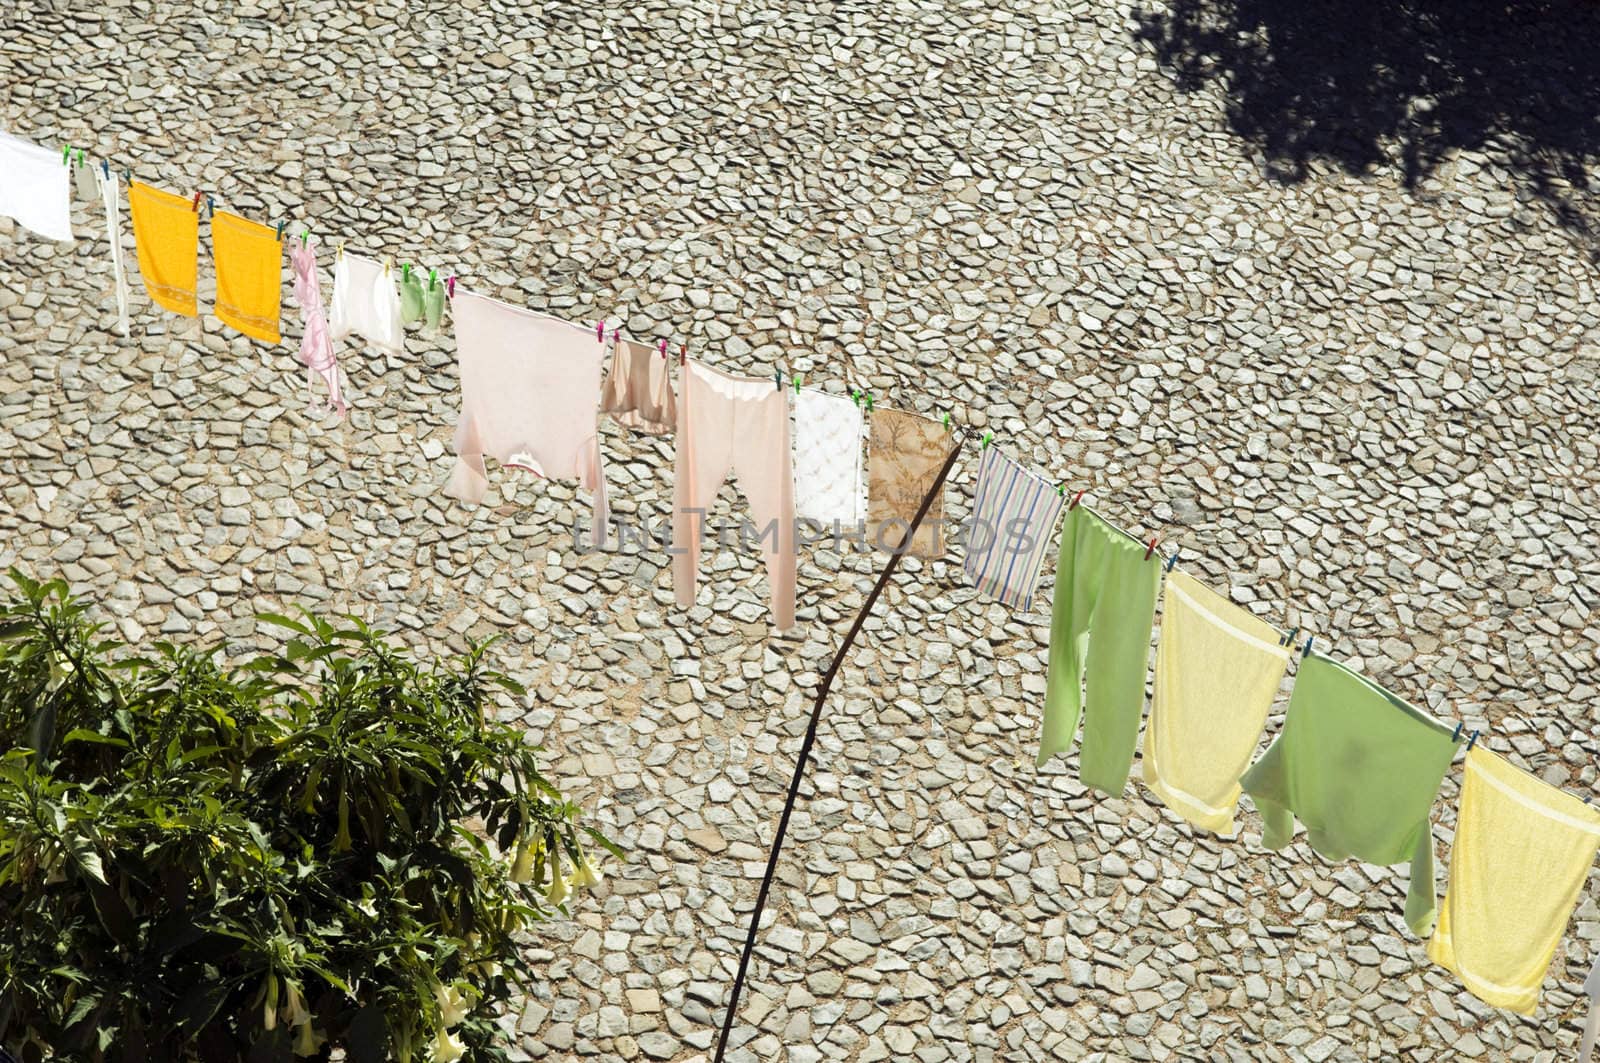 Cloth drying by mrfotos